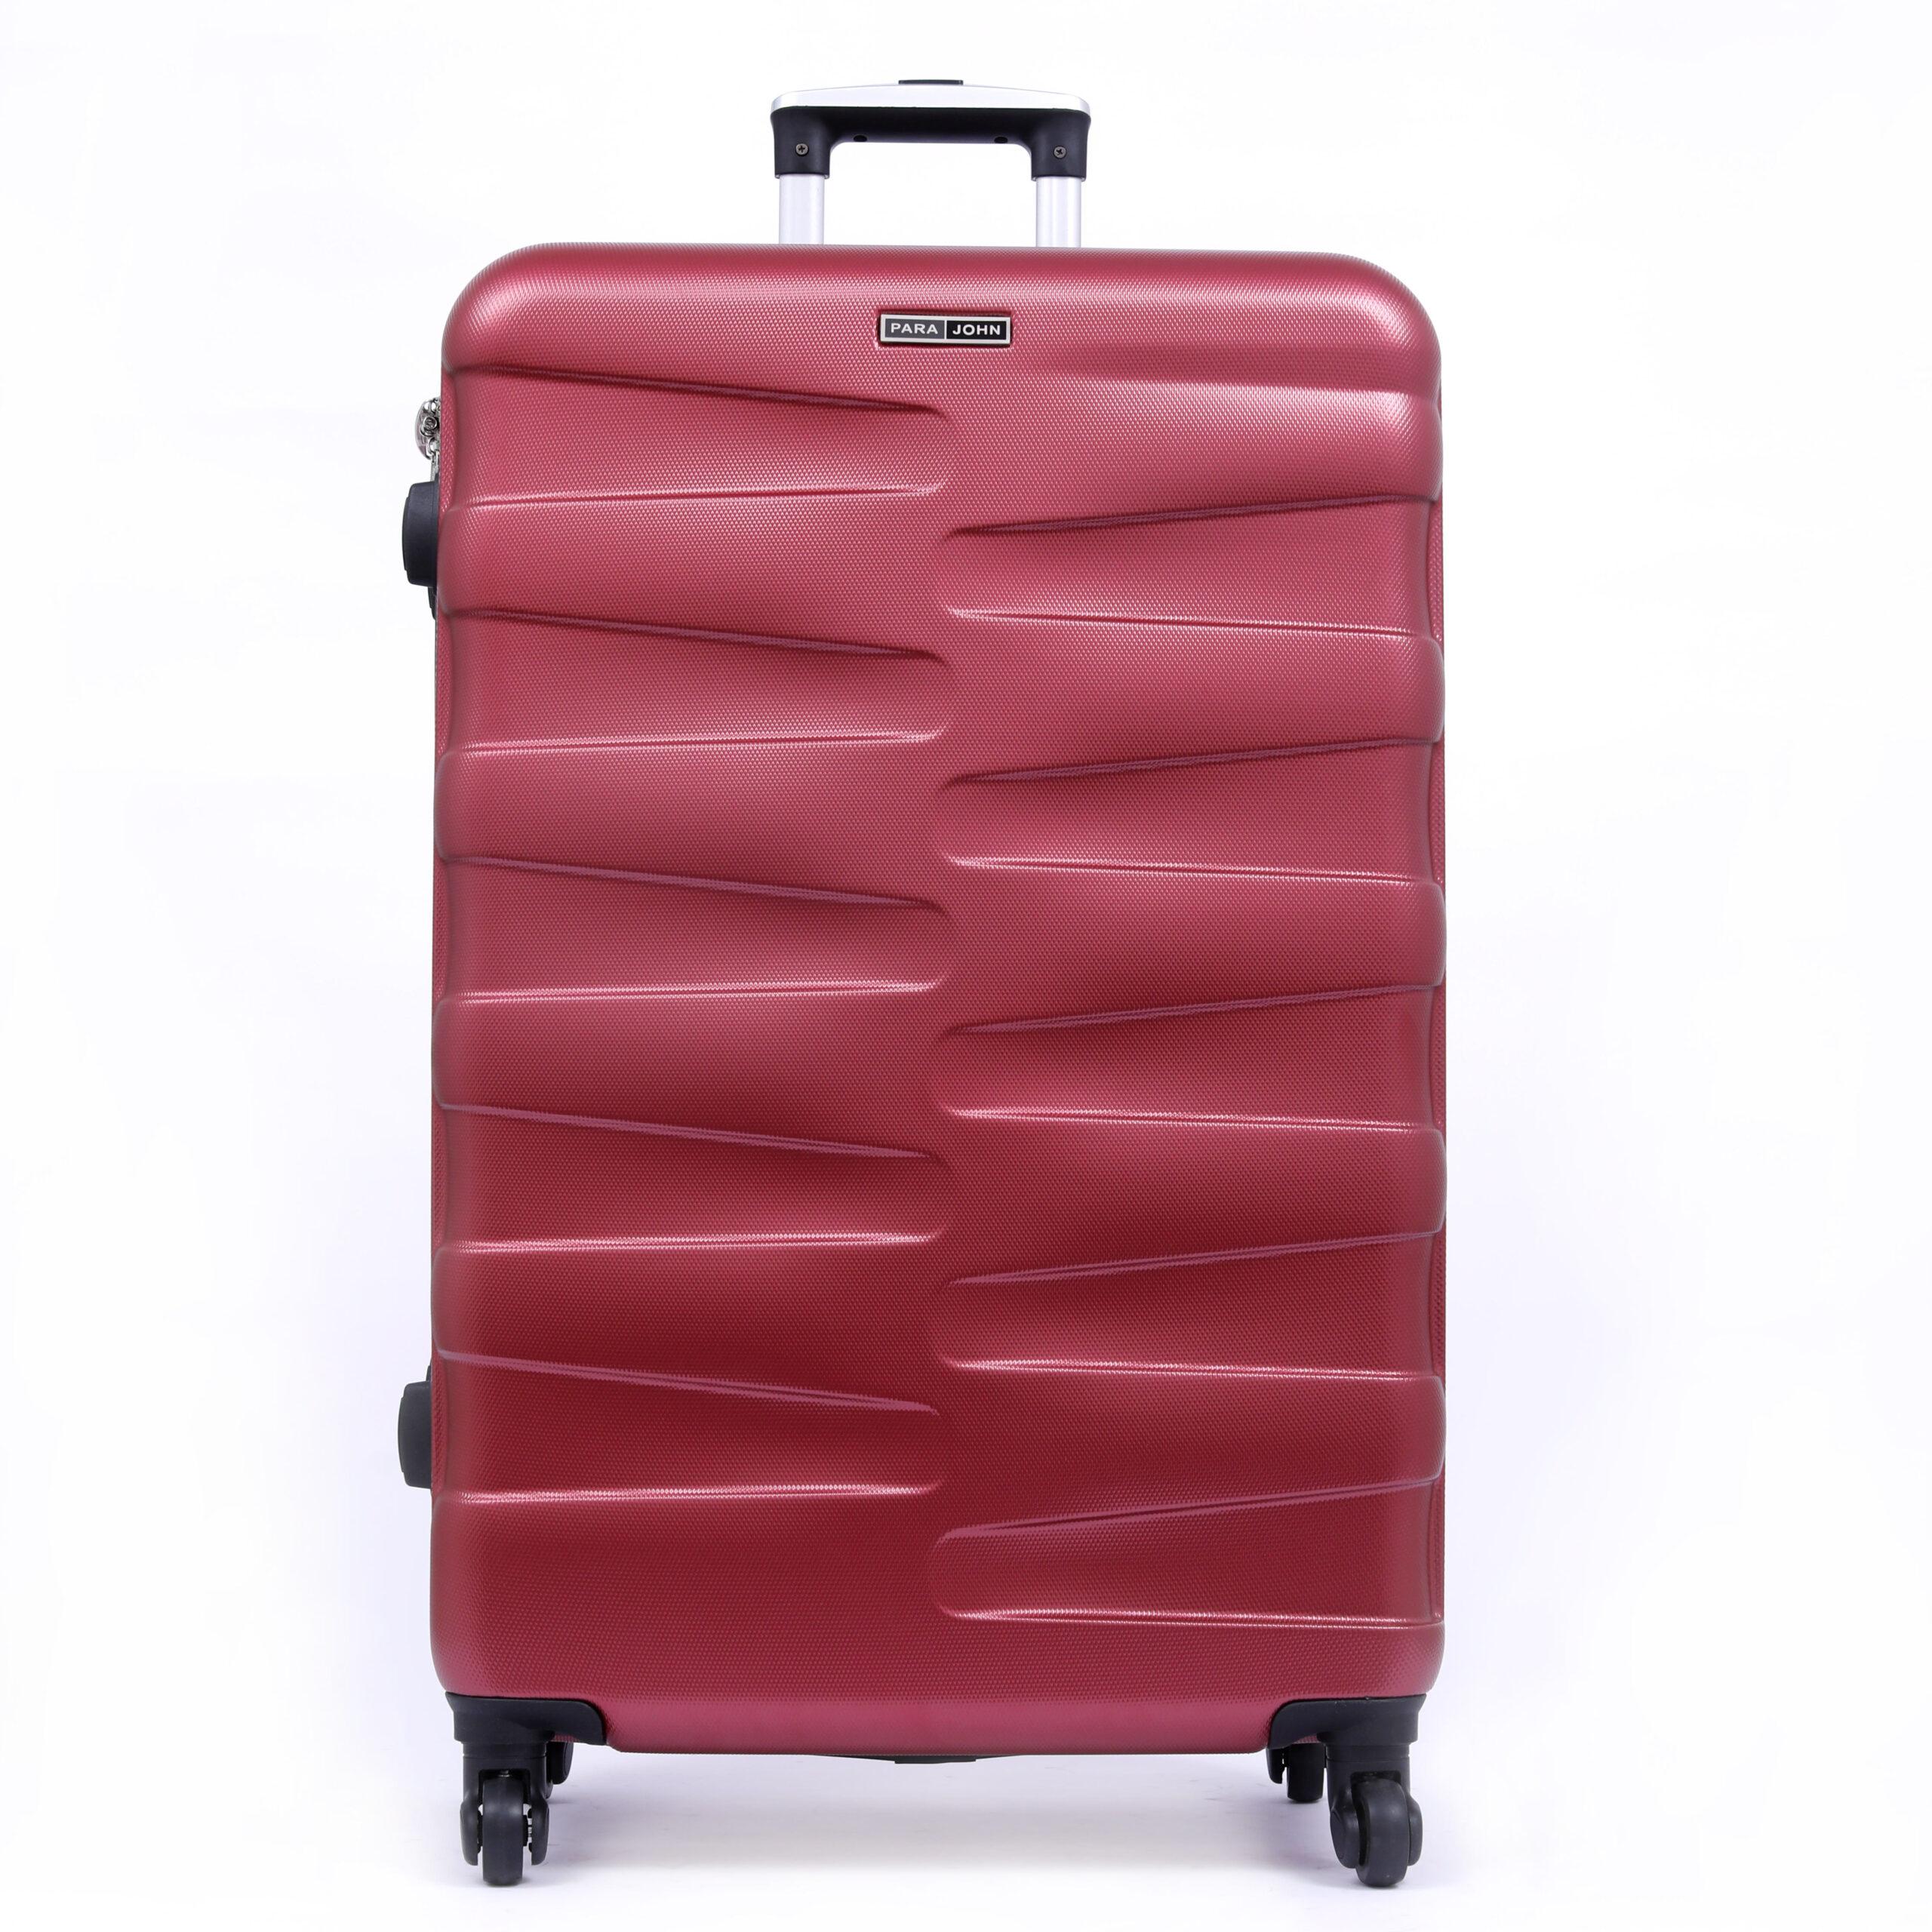 طقم حقائب سفر 3 حقائب مادة ABS بعجلات دوارة (20 ، 24 ، 28) بوصة أحمر PARA JOHN - Travel Luggage Suitcase Set of 3 -  Trolley Bag, Carry On Hand Cabin Luggage Bag (20 ، 24 ، 28) inch - cG9zdDo0MzgwOTE=